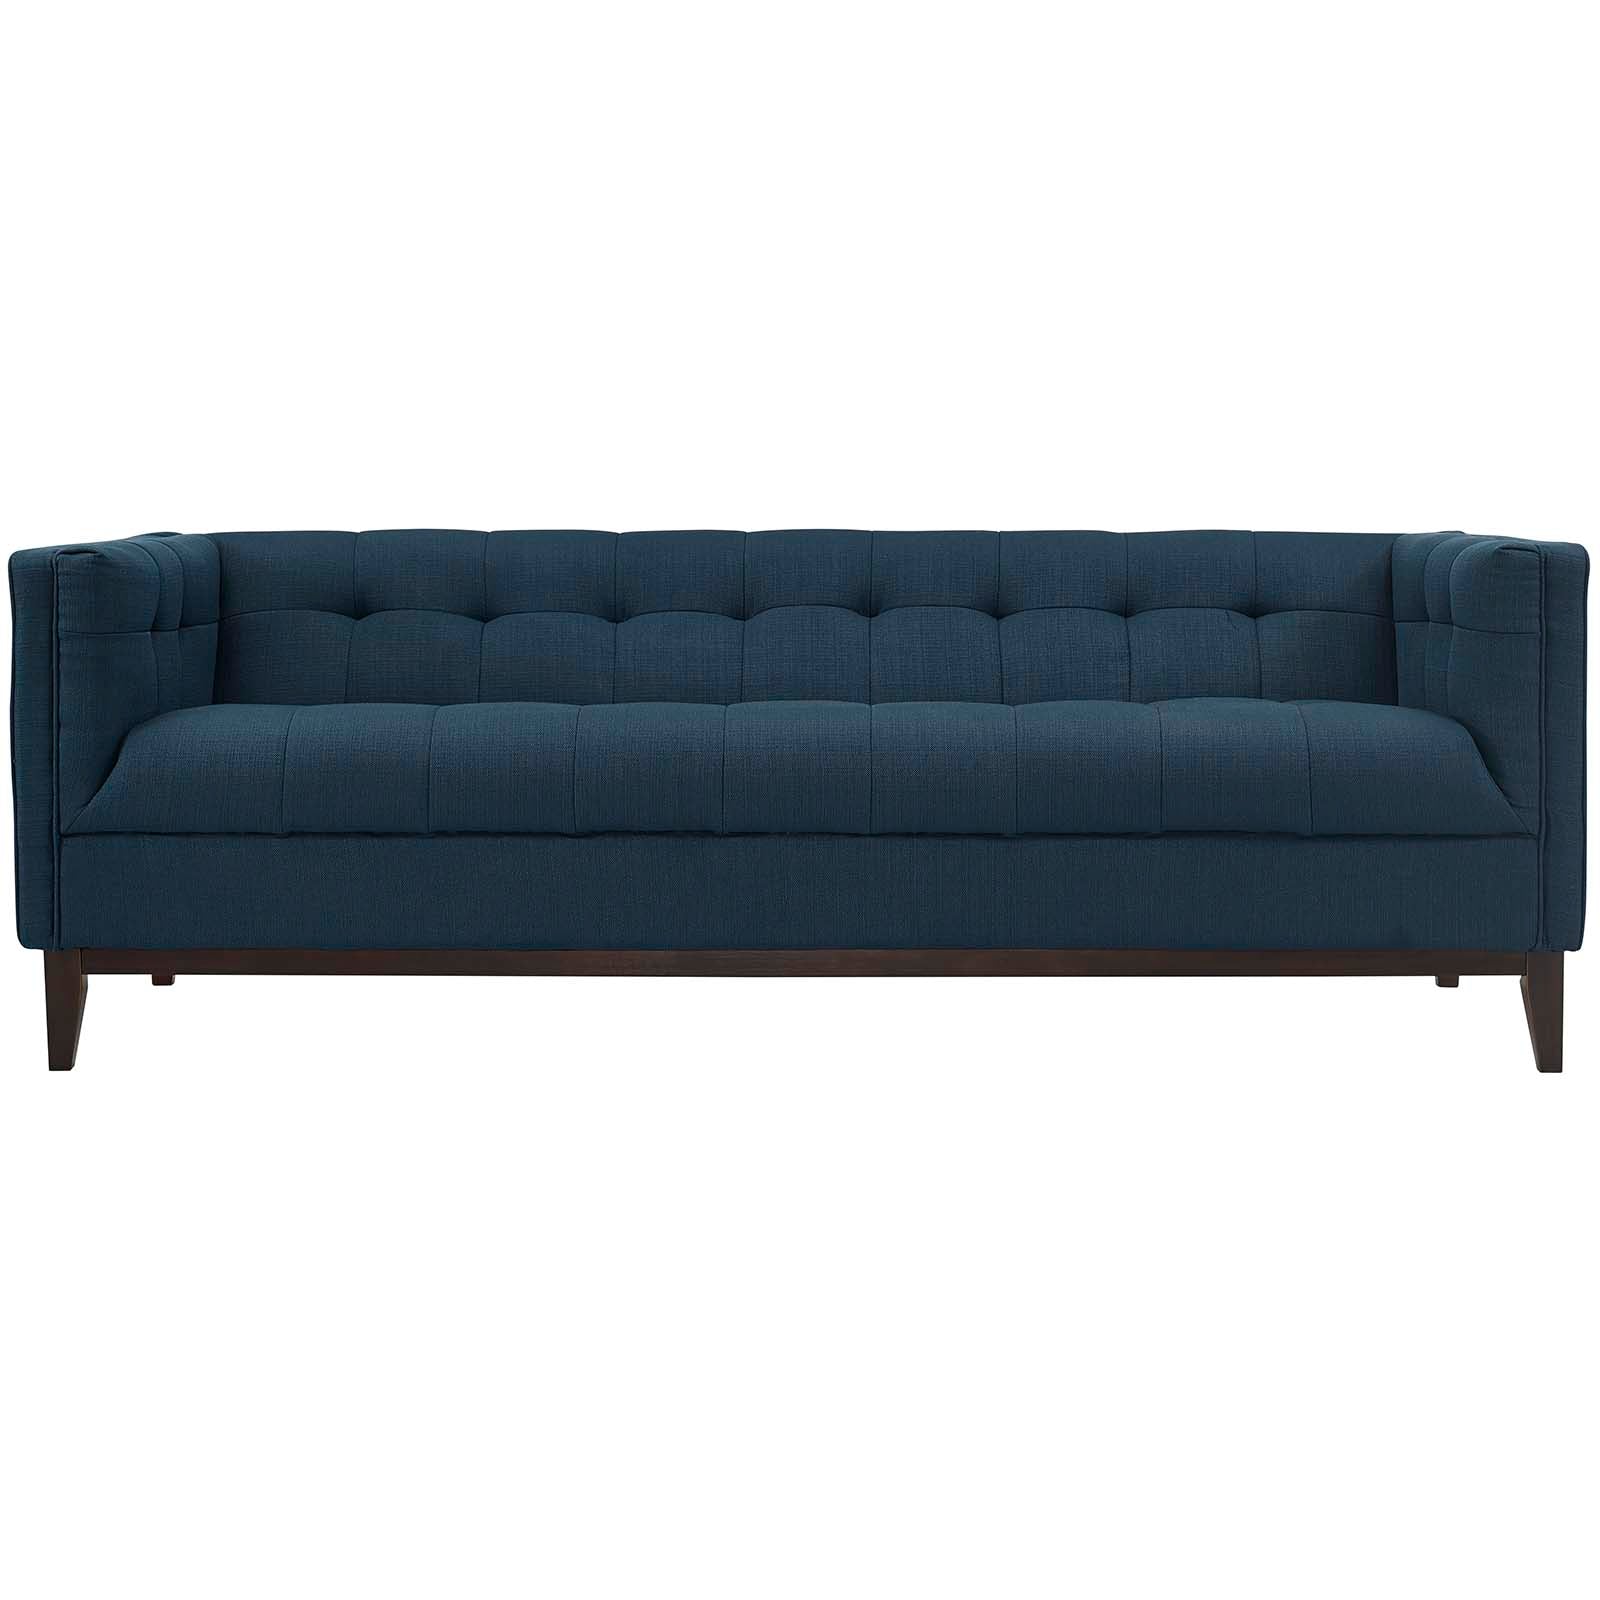 Serve Upholstered Fabric Sofa